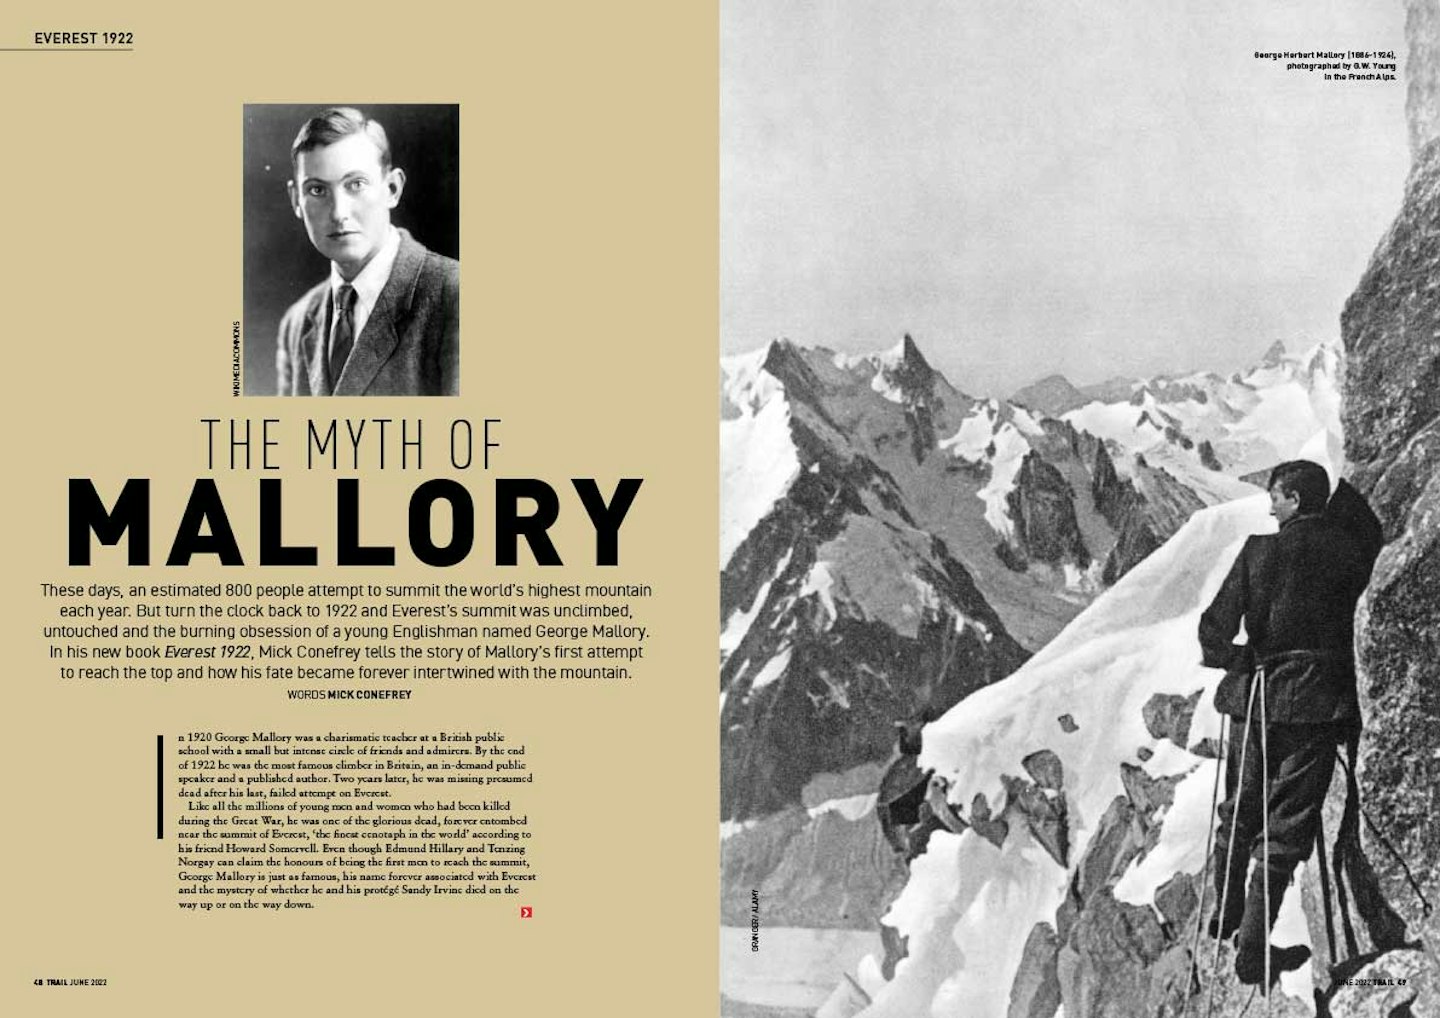 Trail magazine article - The myth of Mallory